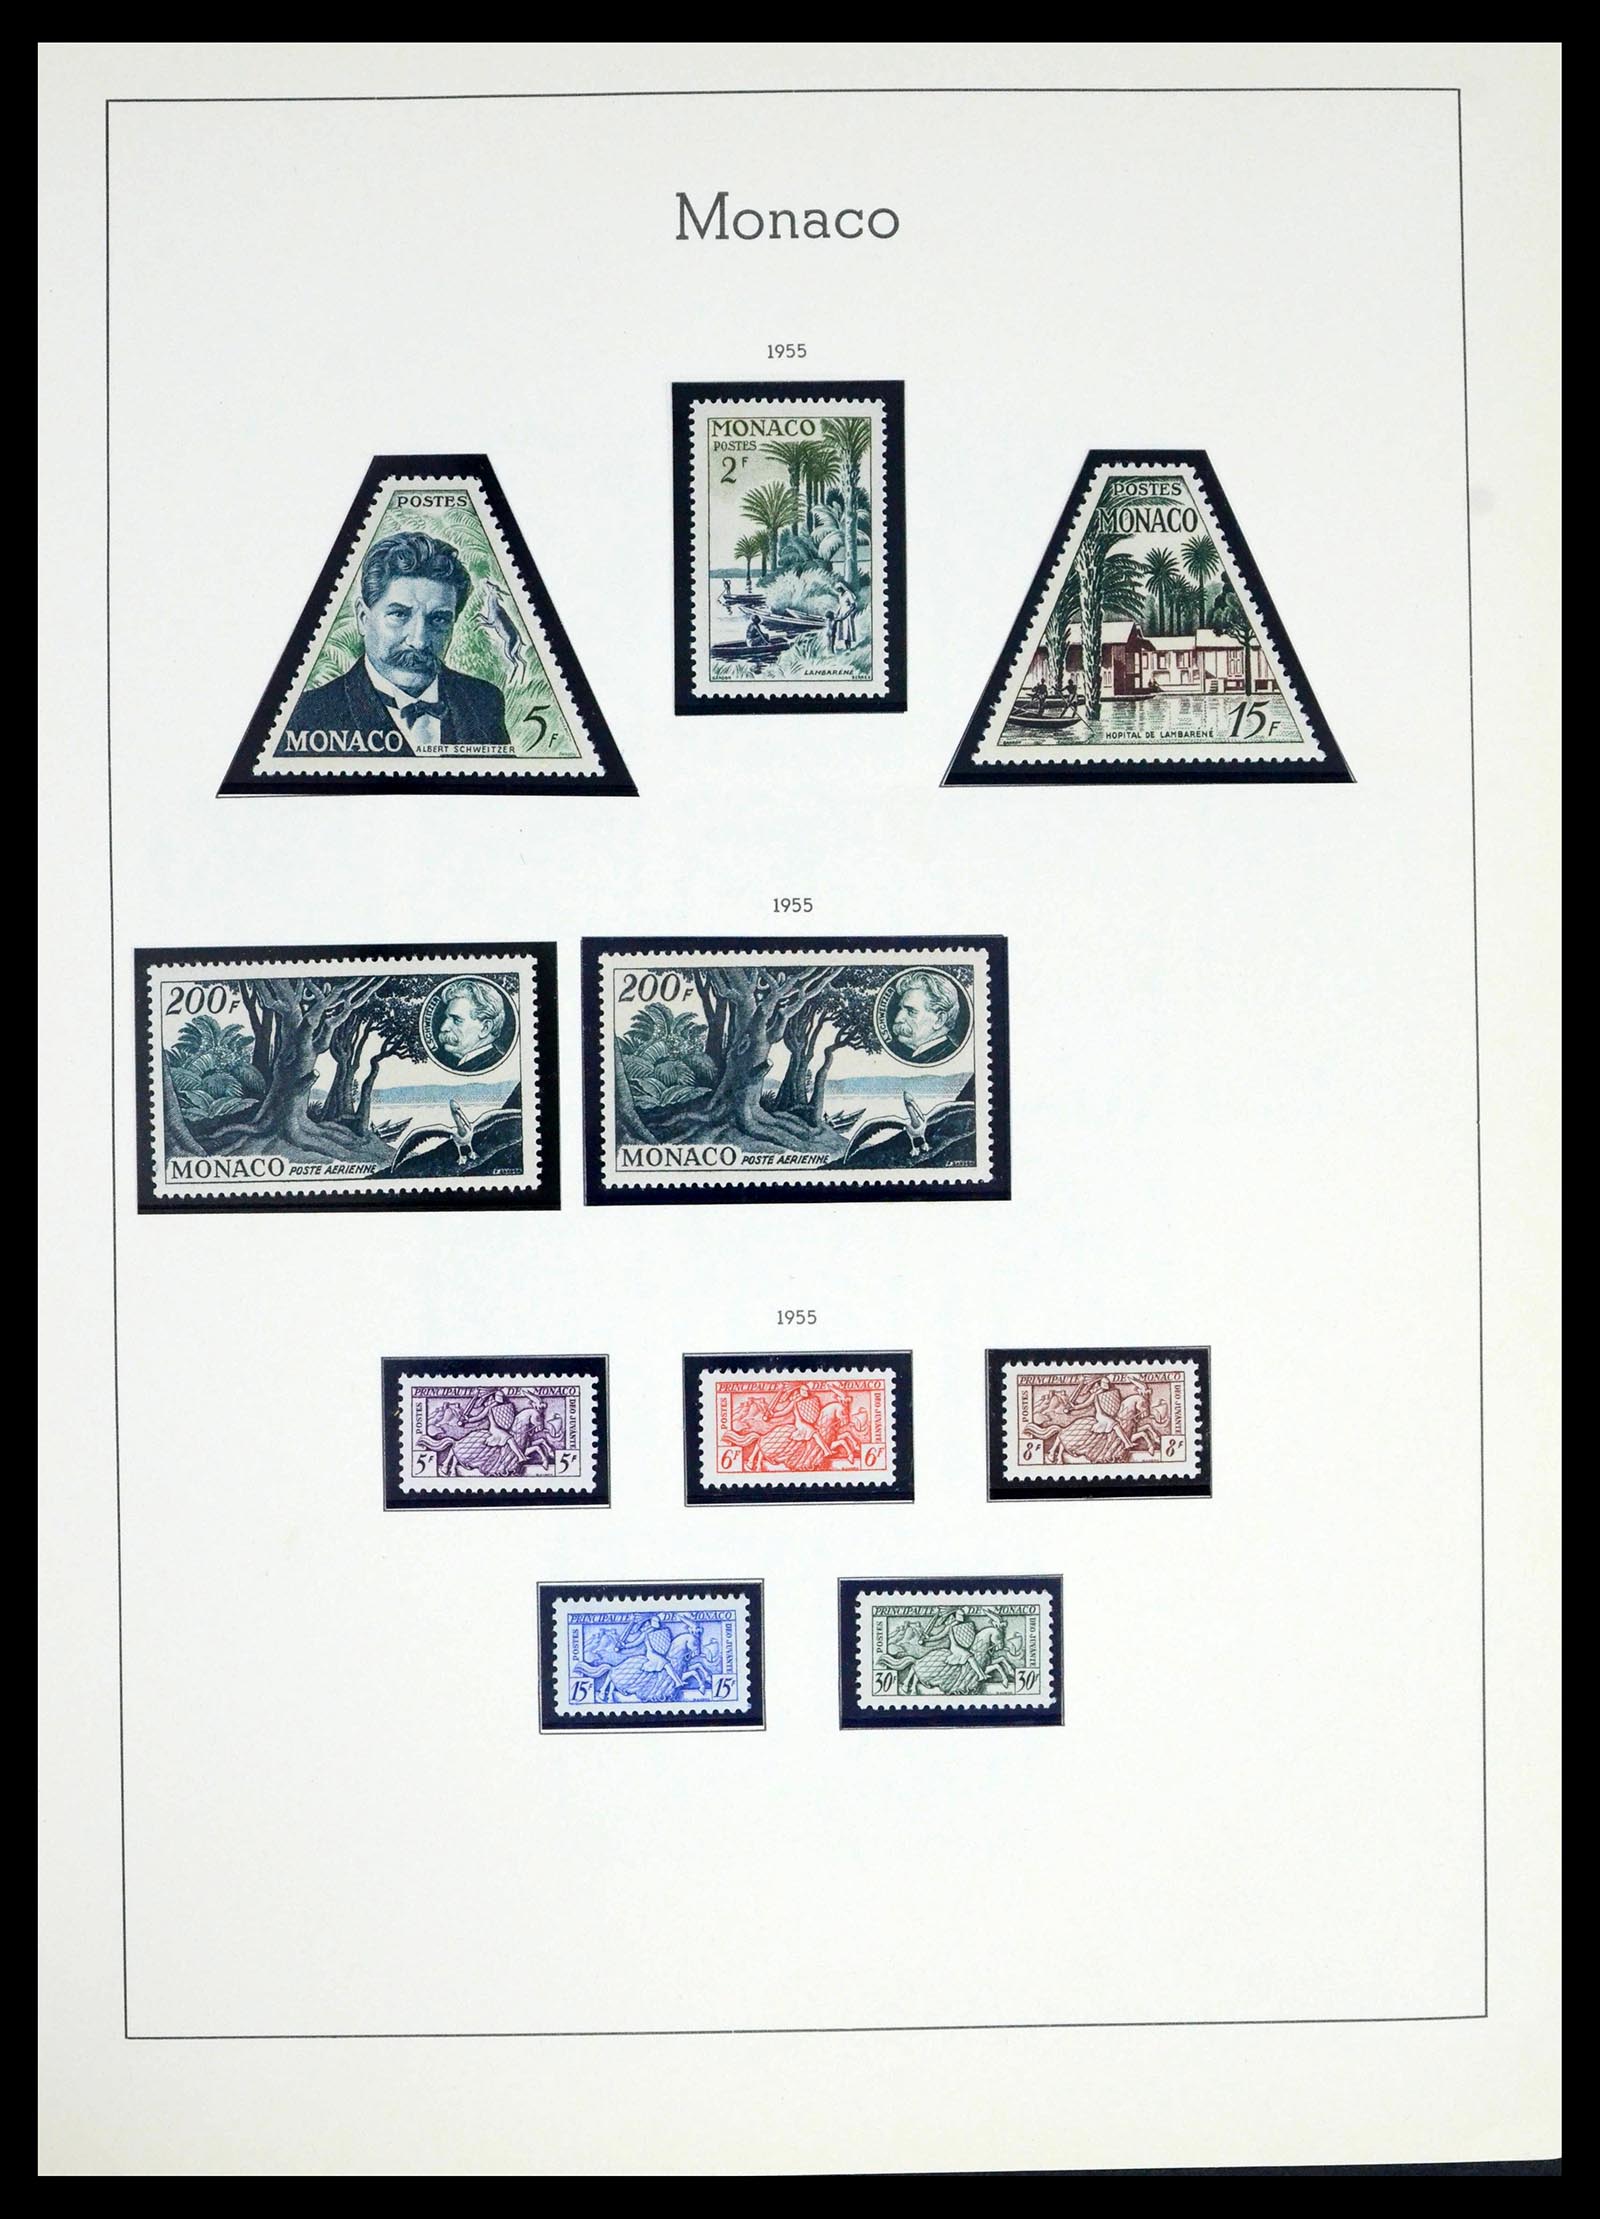 39392 0048 - Stamp collection 39392 Monaco 1885-1999.